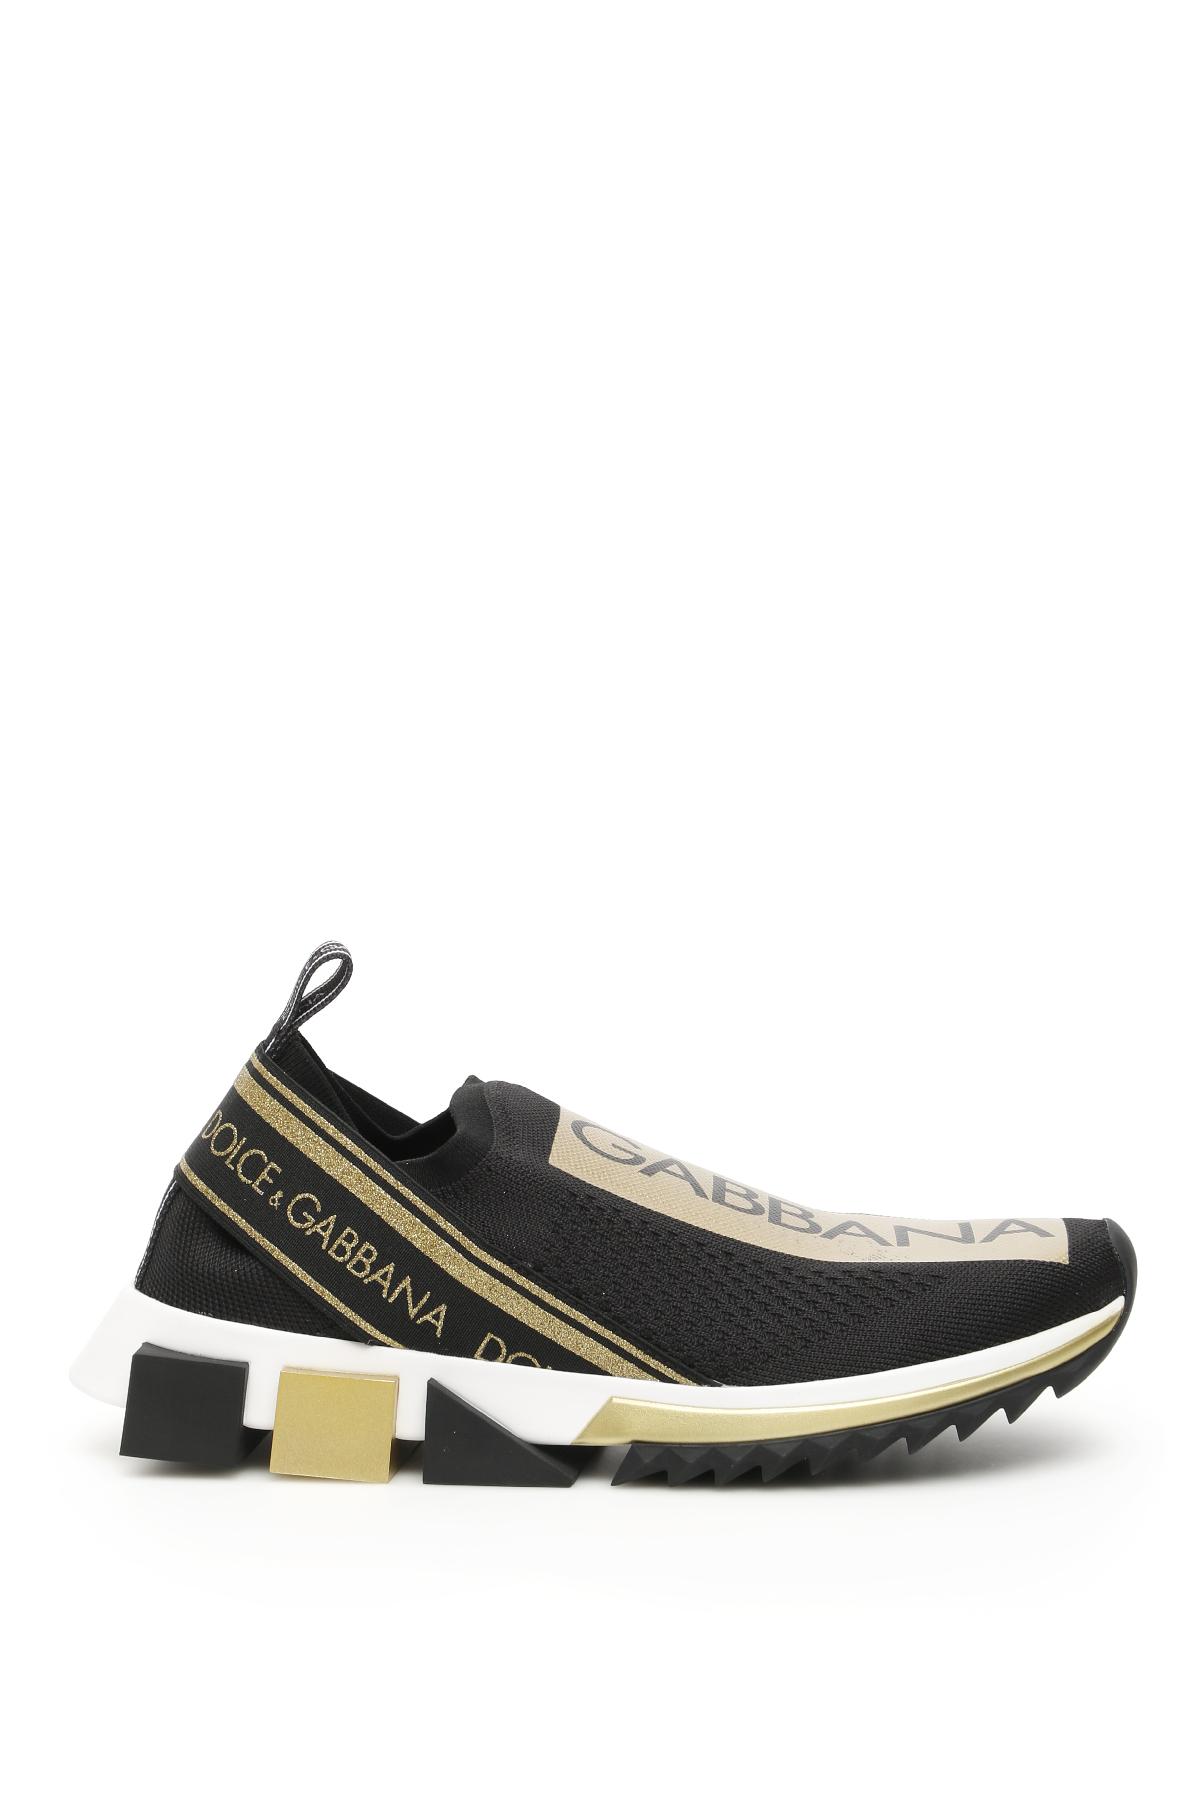 Dolce & Gabbana Sorrento Running Sneakers in Metallic - Lyst